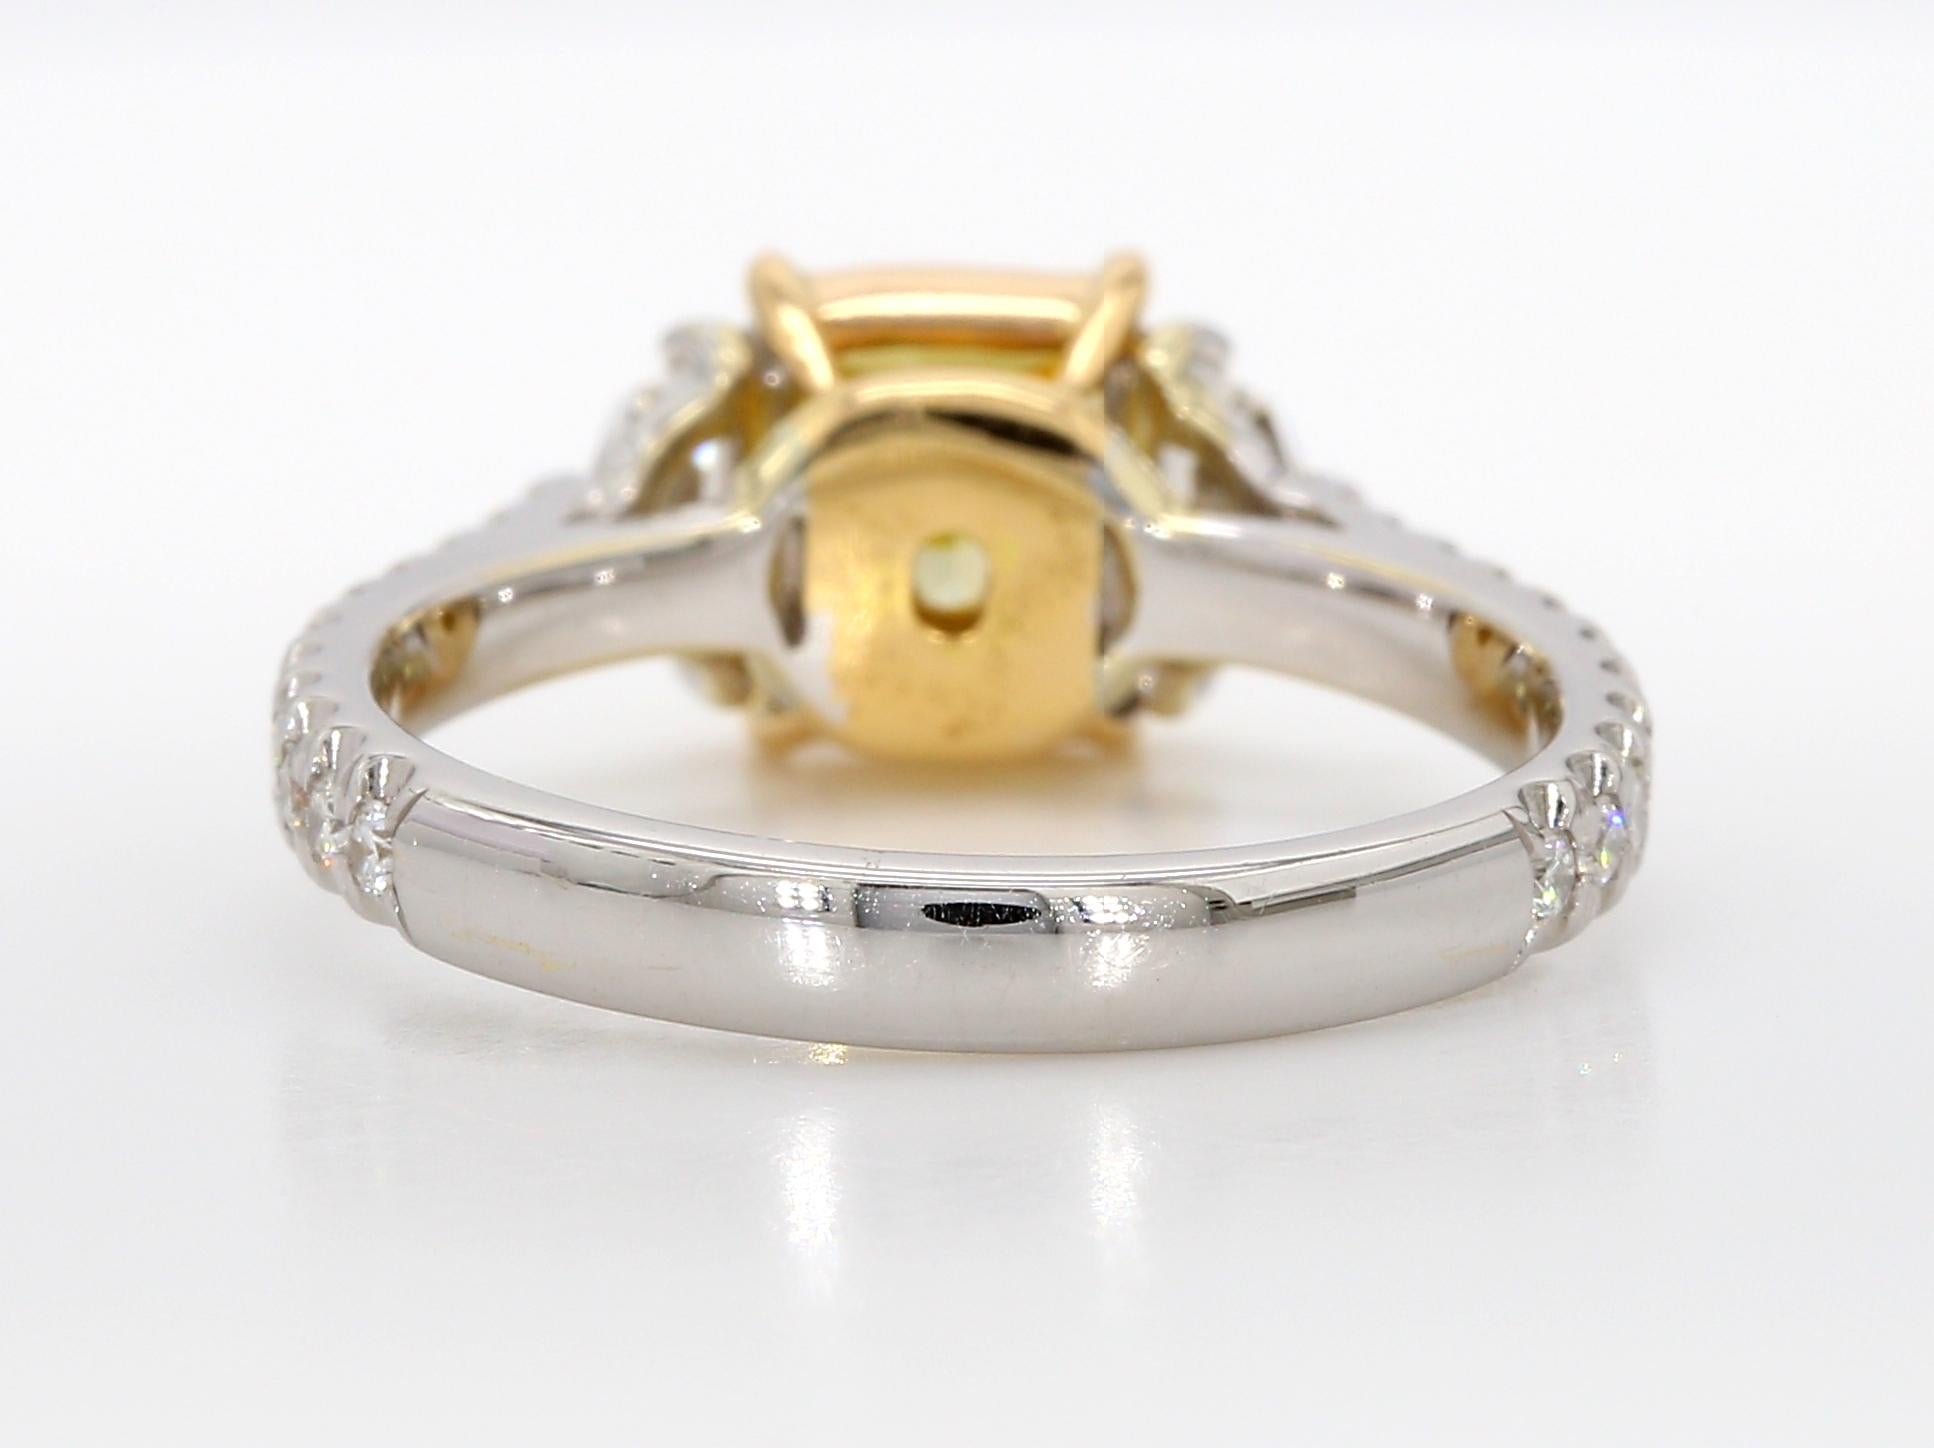 Cushion Cut 1.67 Carat Fancy Intense Yellow Diamond Three-Stone Engagement Ring, GIA Cert. For Sale